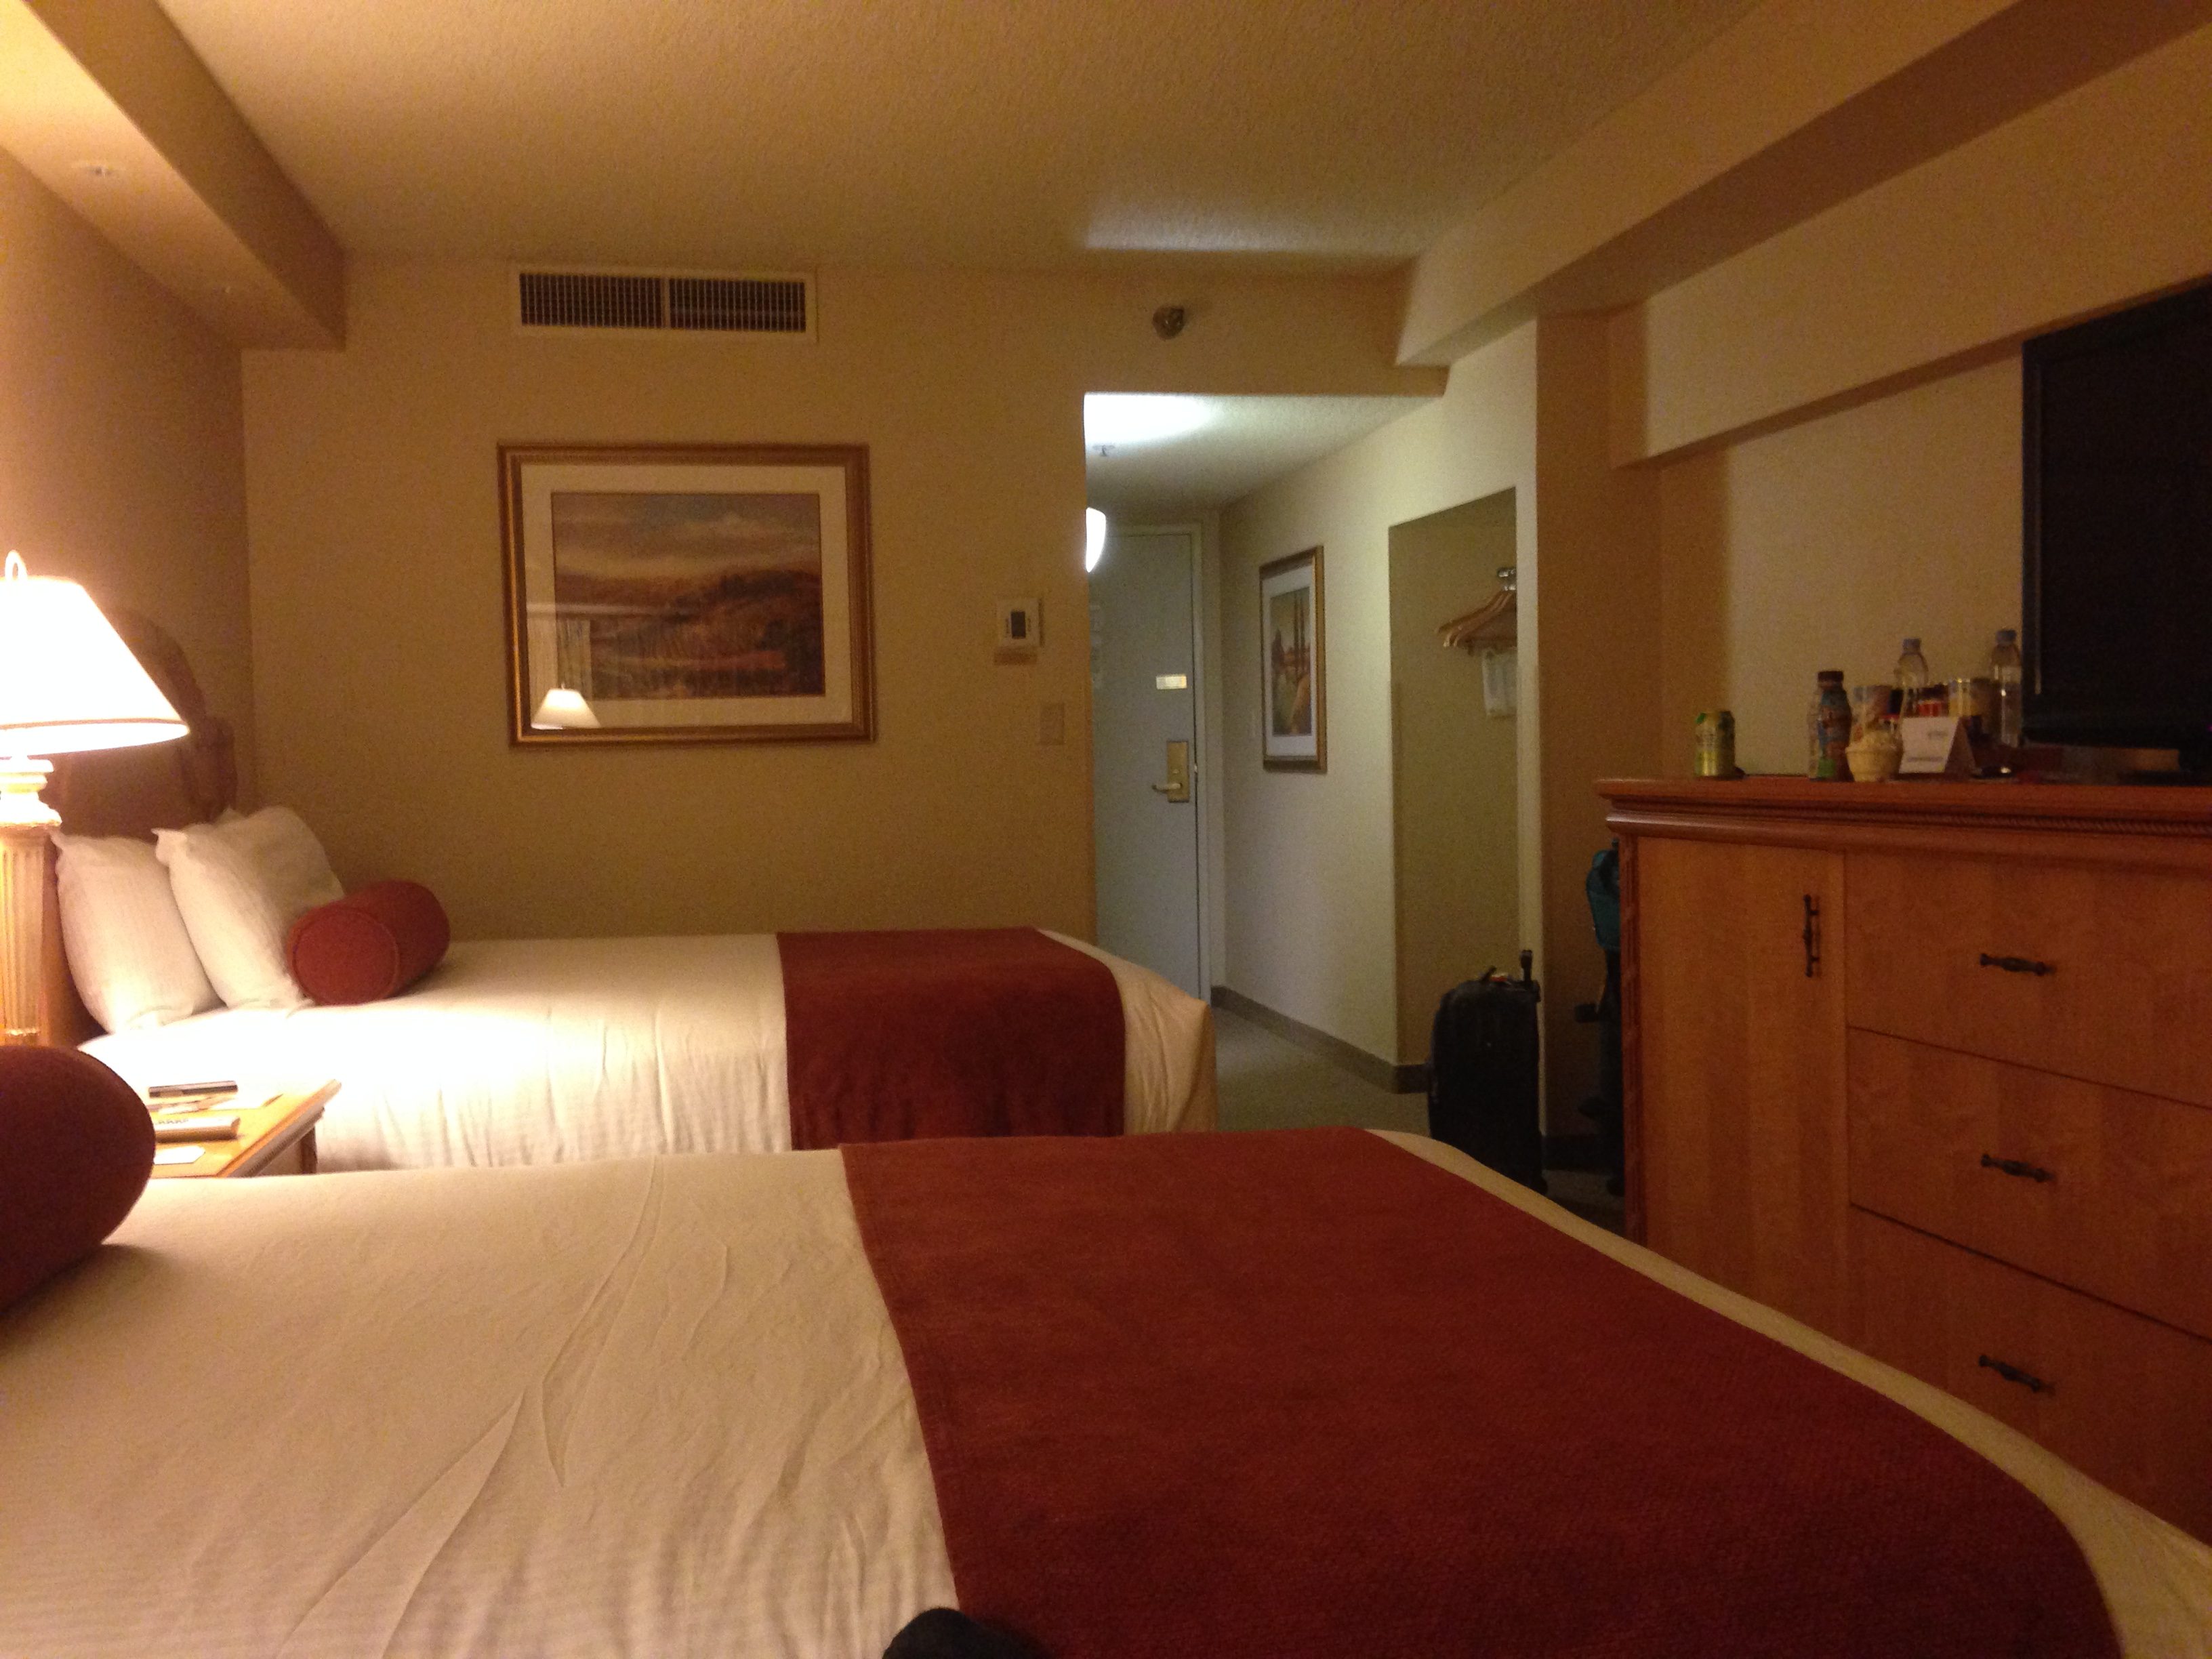 Our pristine hotel room.